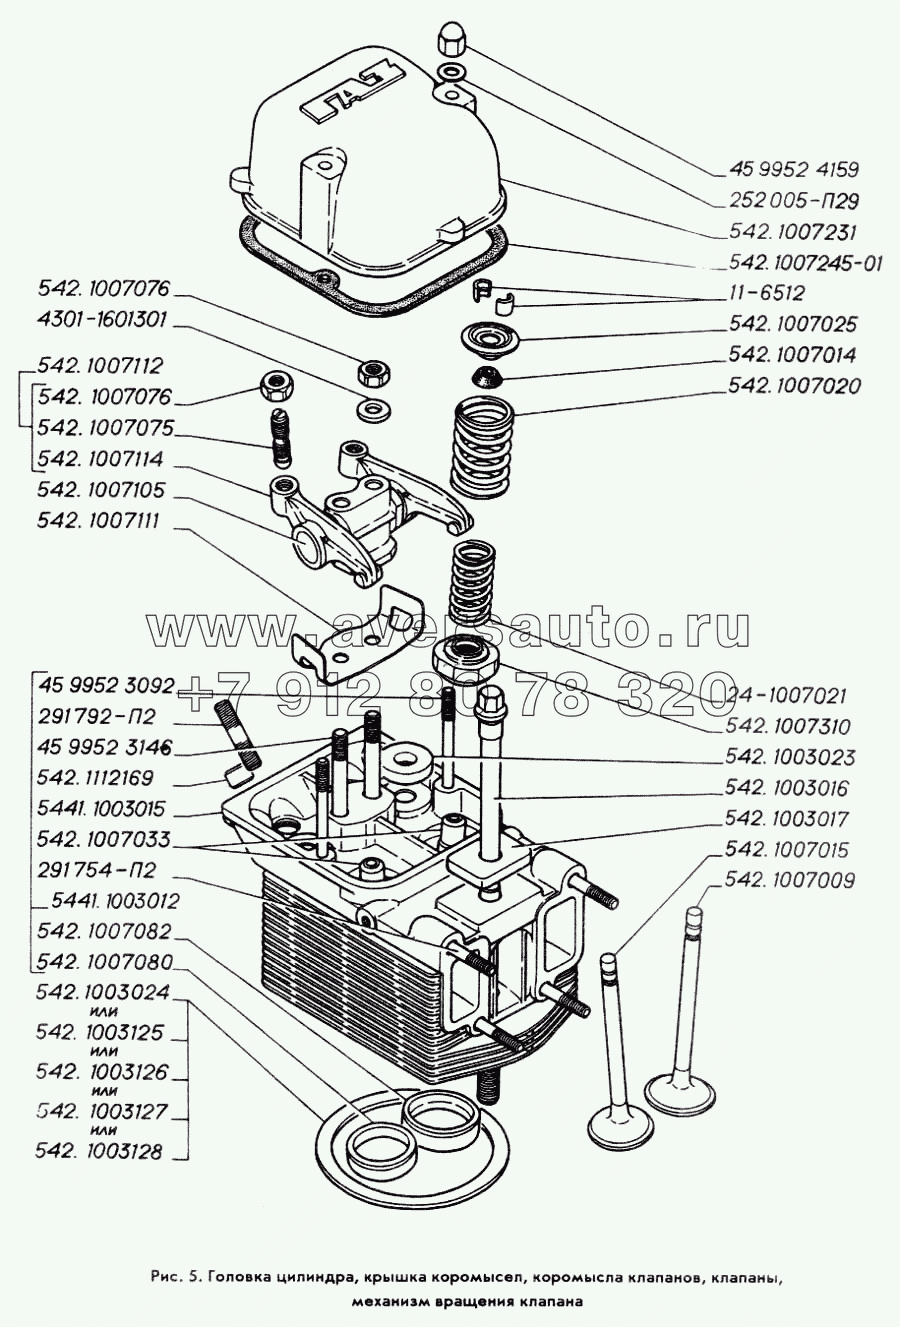 Головка цилиндра, крышка коромысел, коромысла клапанов, клапаны, механизм вращения клапана